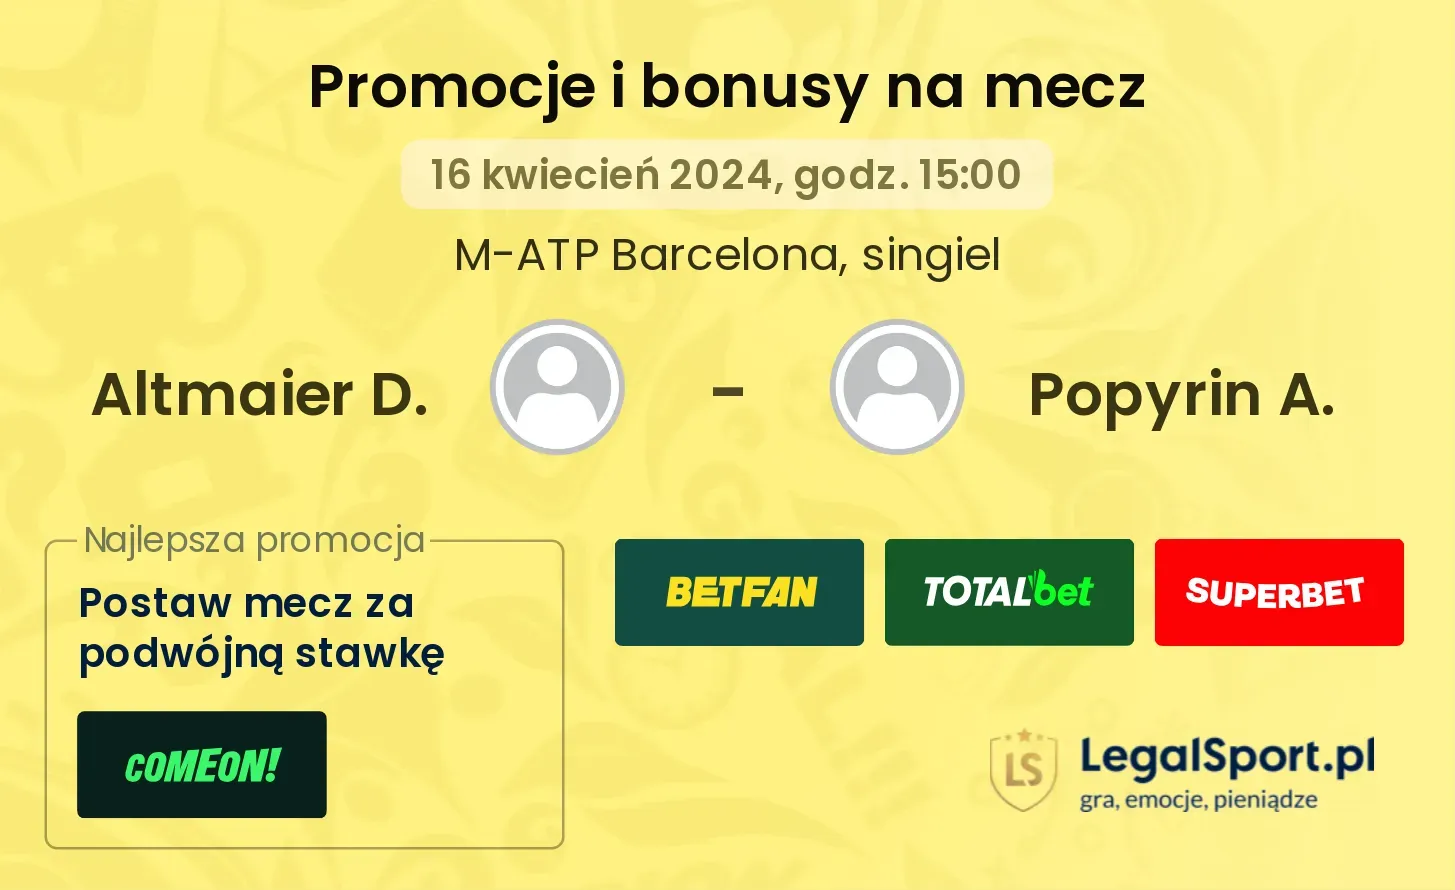 Altmaier D. - Popyrin A. promocje bonusy na mecz